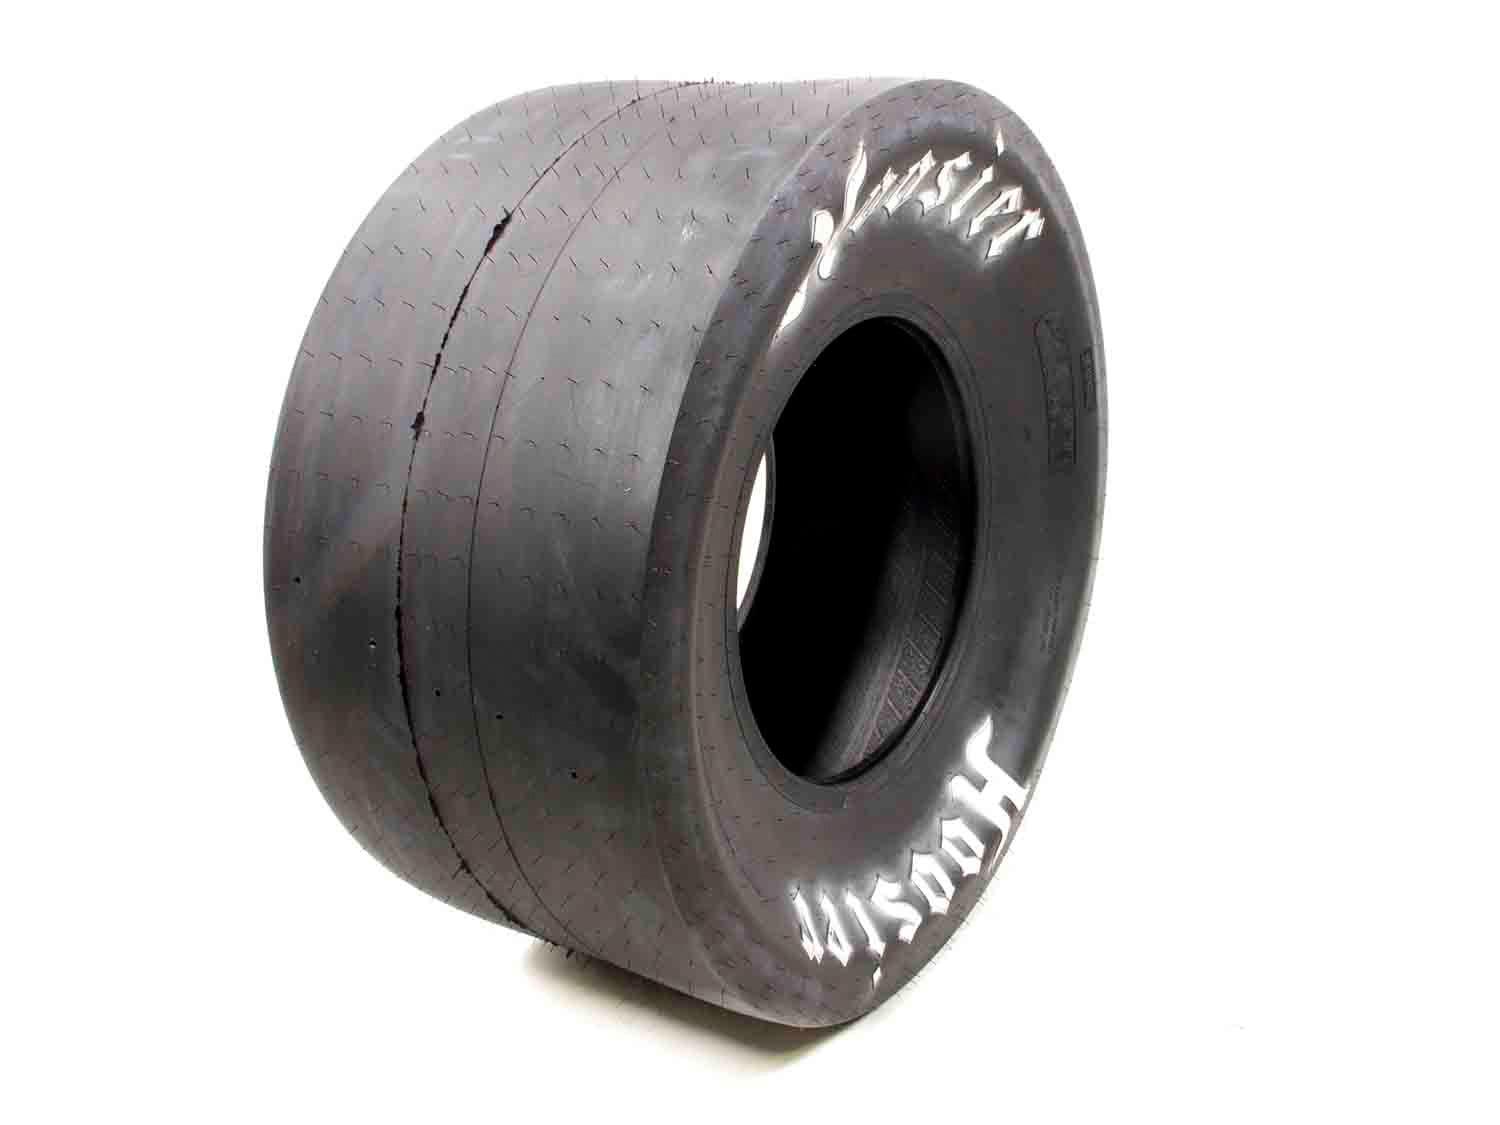 31.0/14-15 Drag Tire - Burlile Performance Products